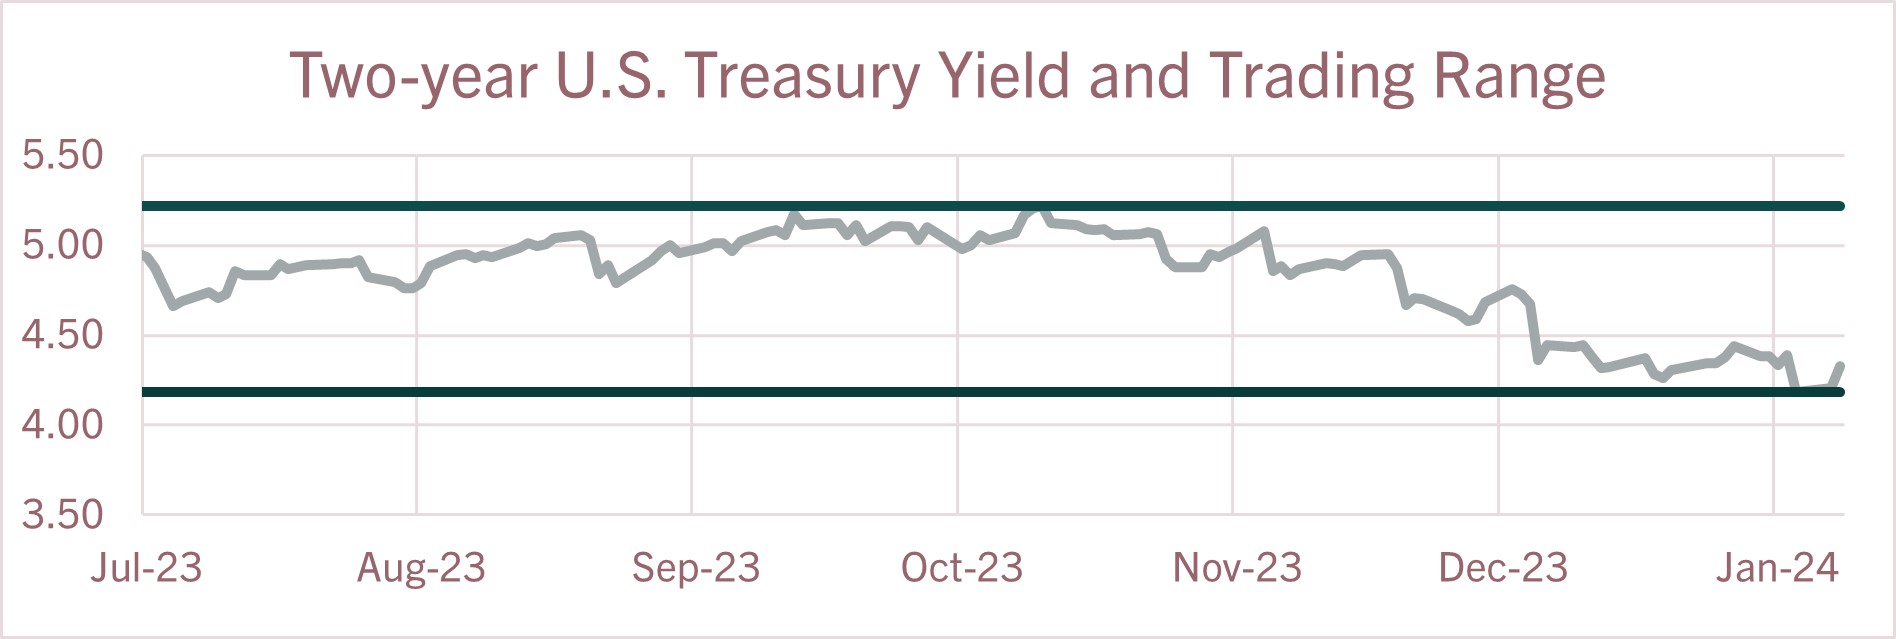 Two year US Treasury Yield and Trading Range